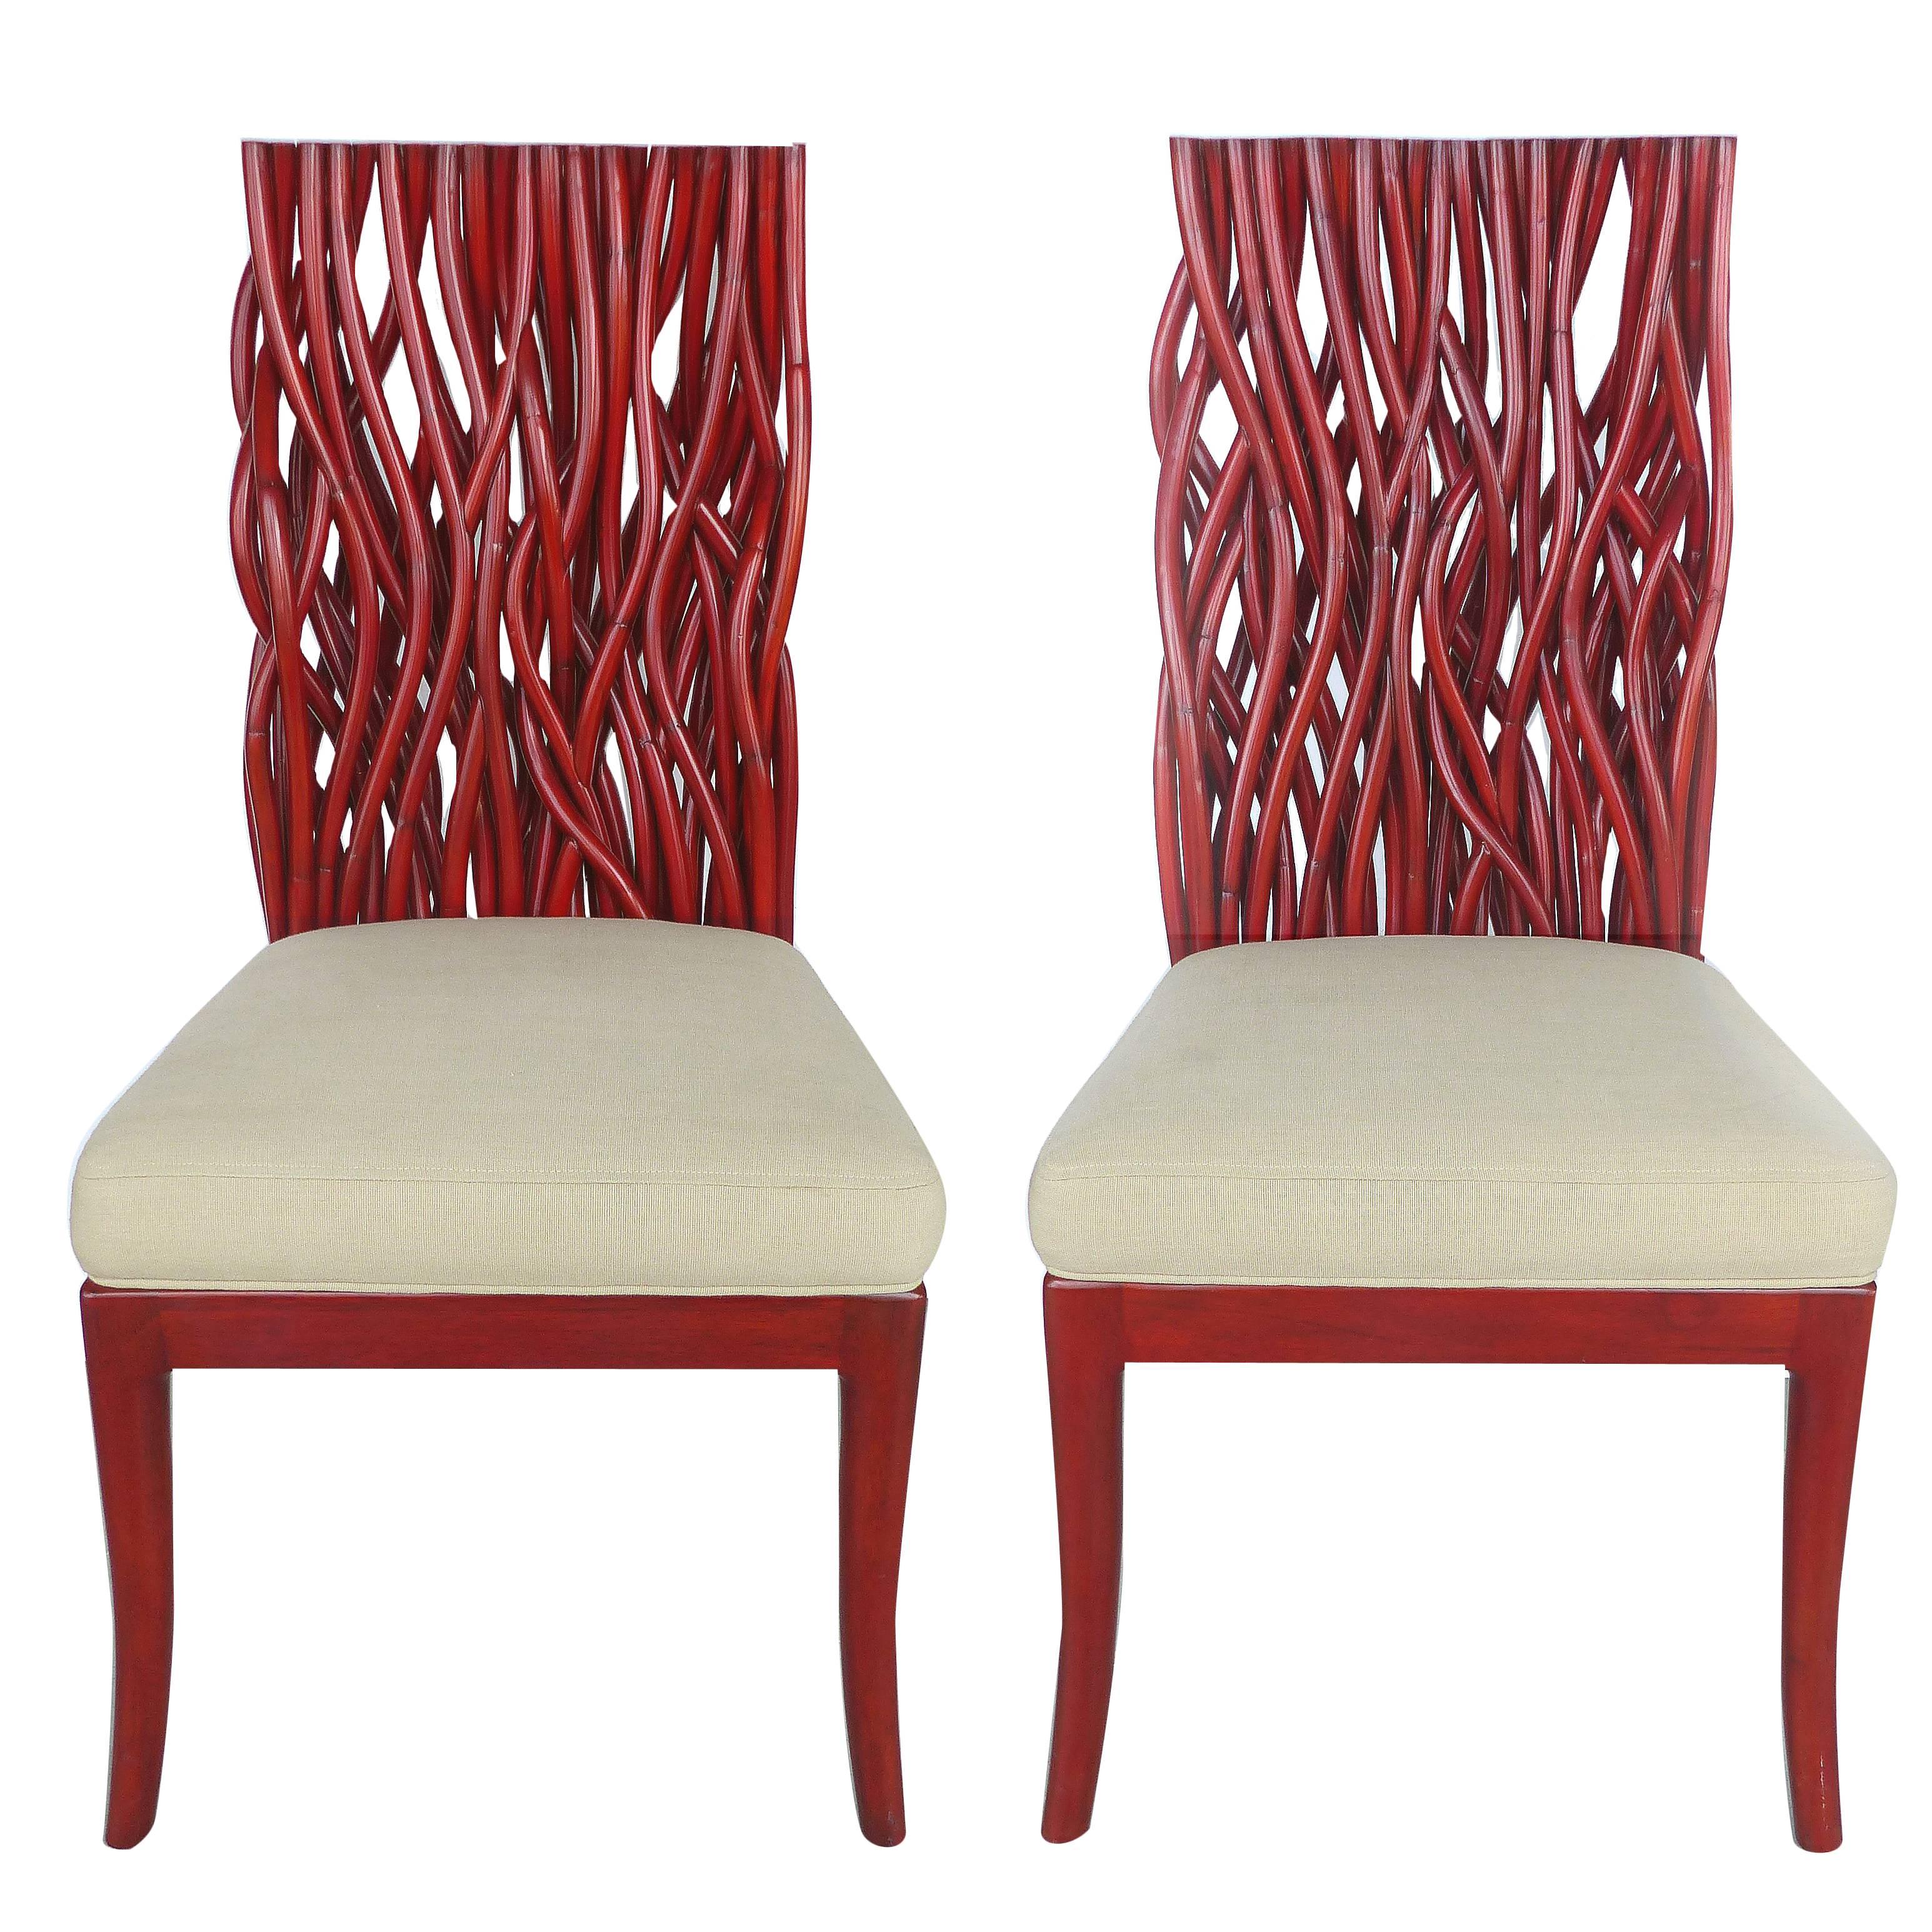 20th Century Red Bent Rattan and Mahogany Chairs, Pair